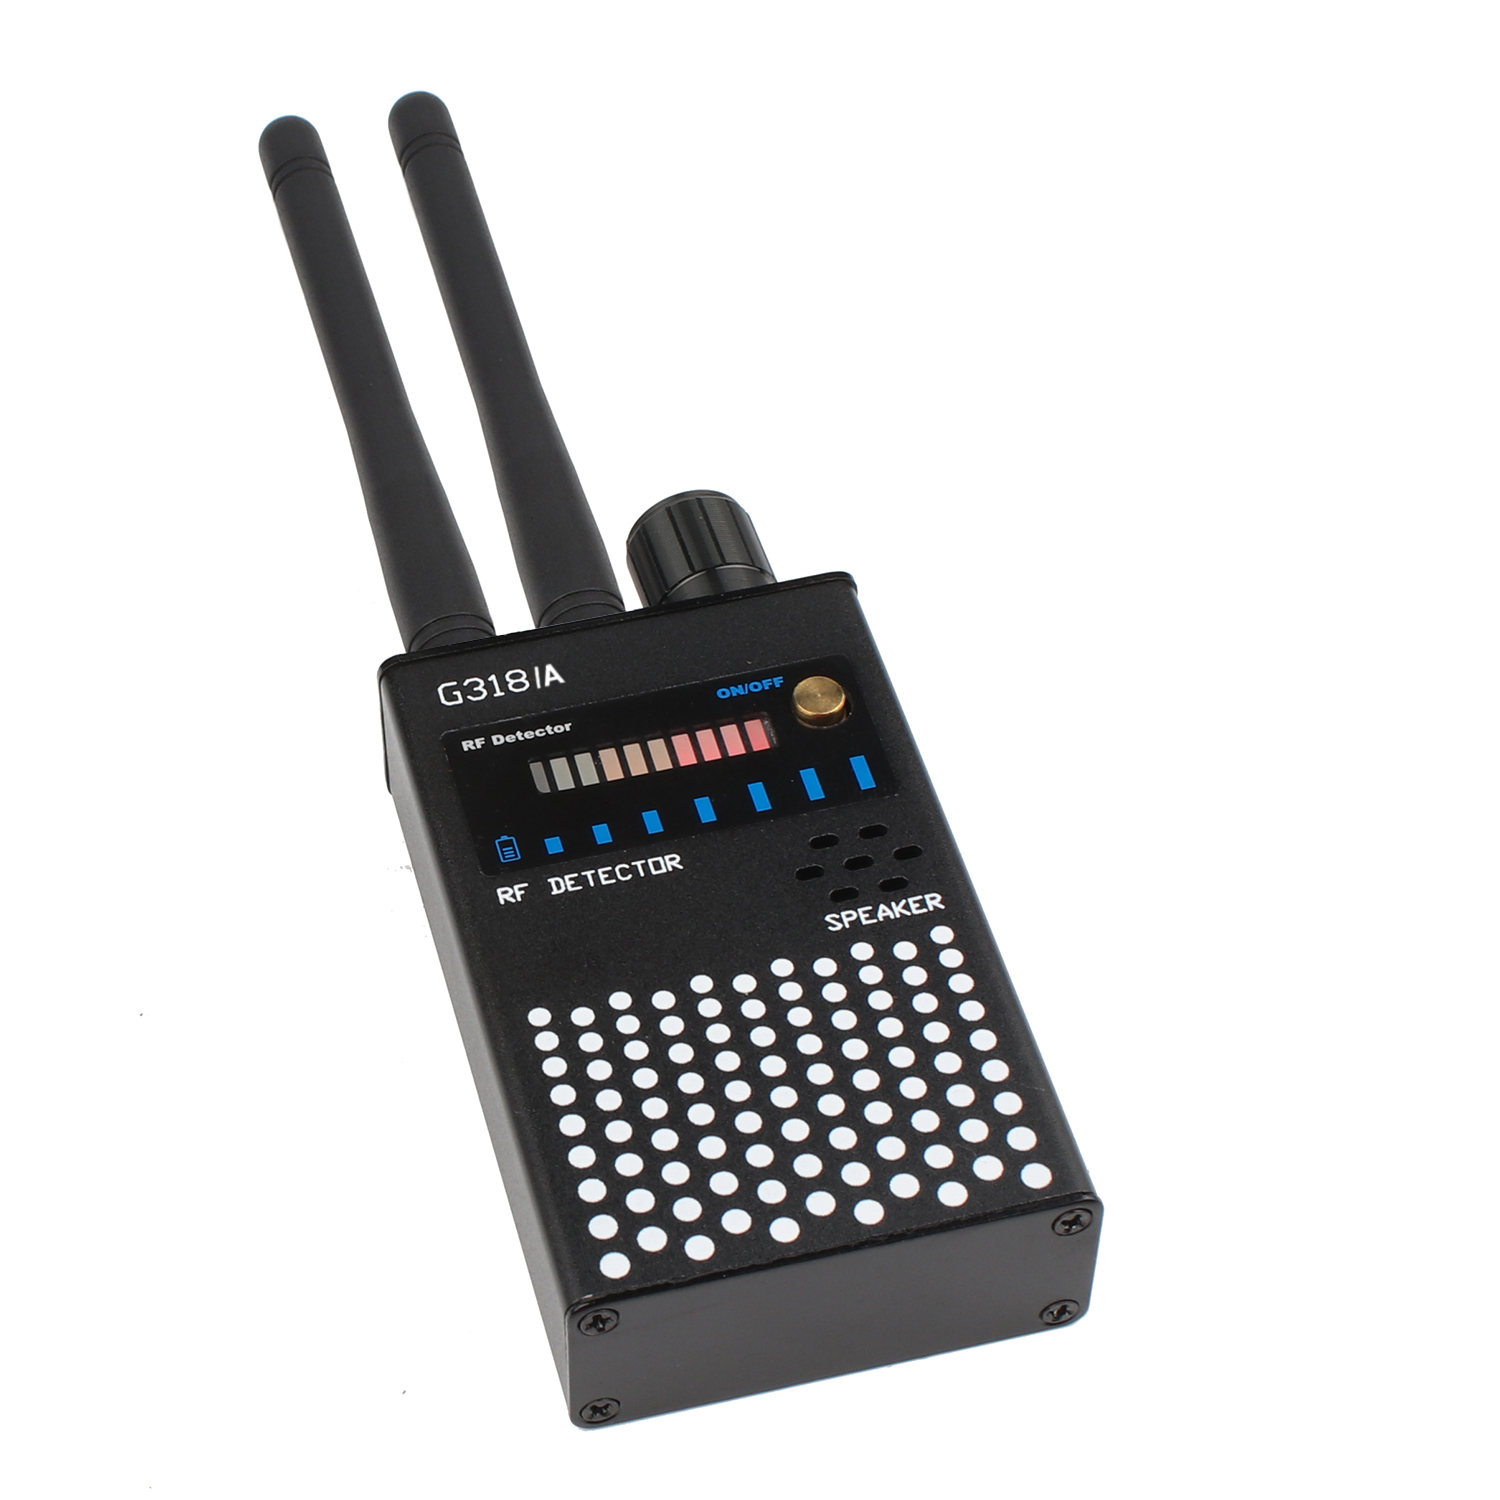 G318A Anti Spy RF Signal Wireless Bug Hidden Camera Detector GSM Listening GPS Tracker Finder